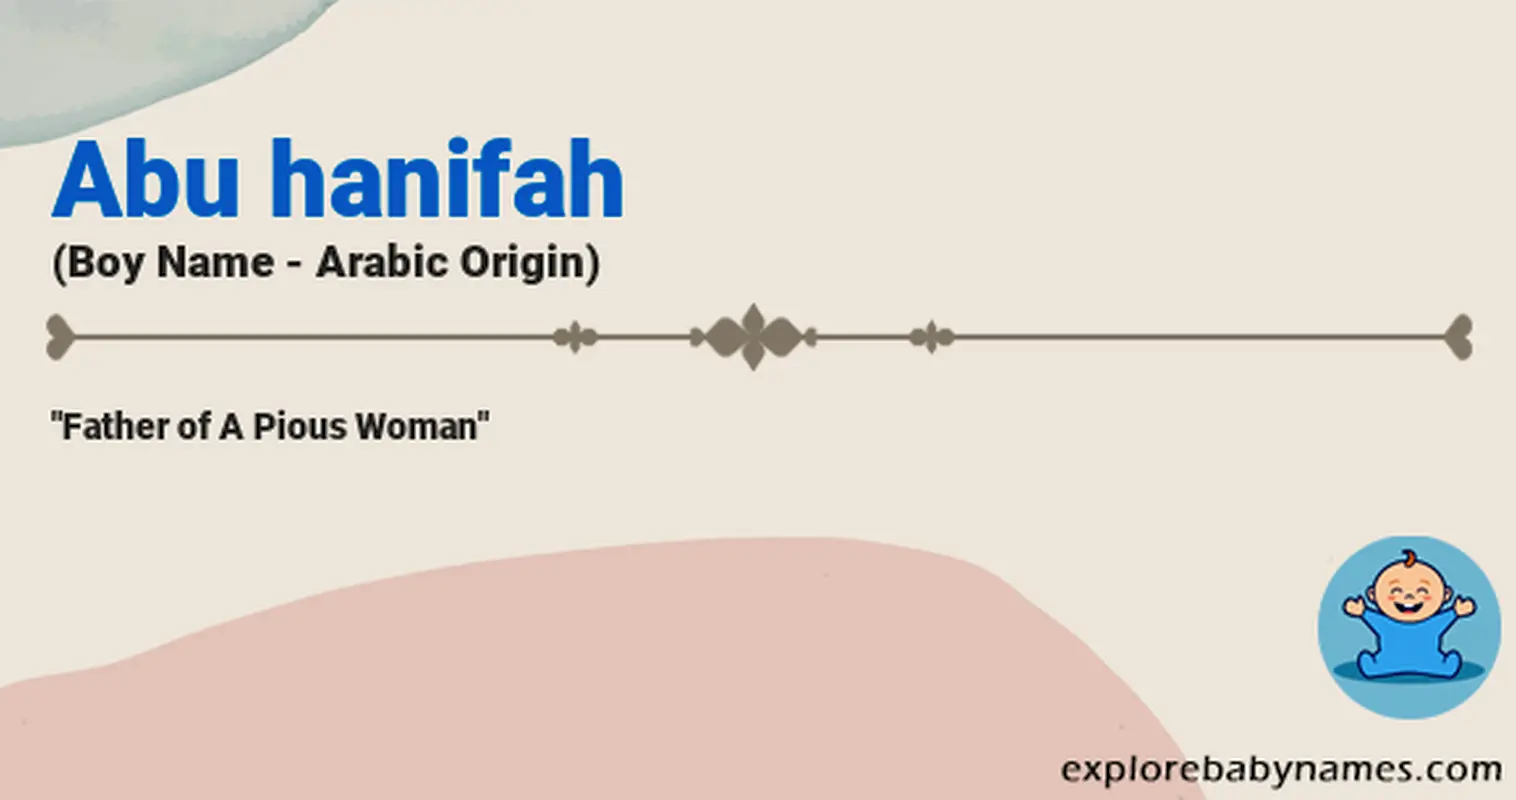 Meaning of Abu hanifah